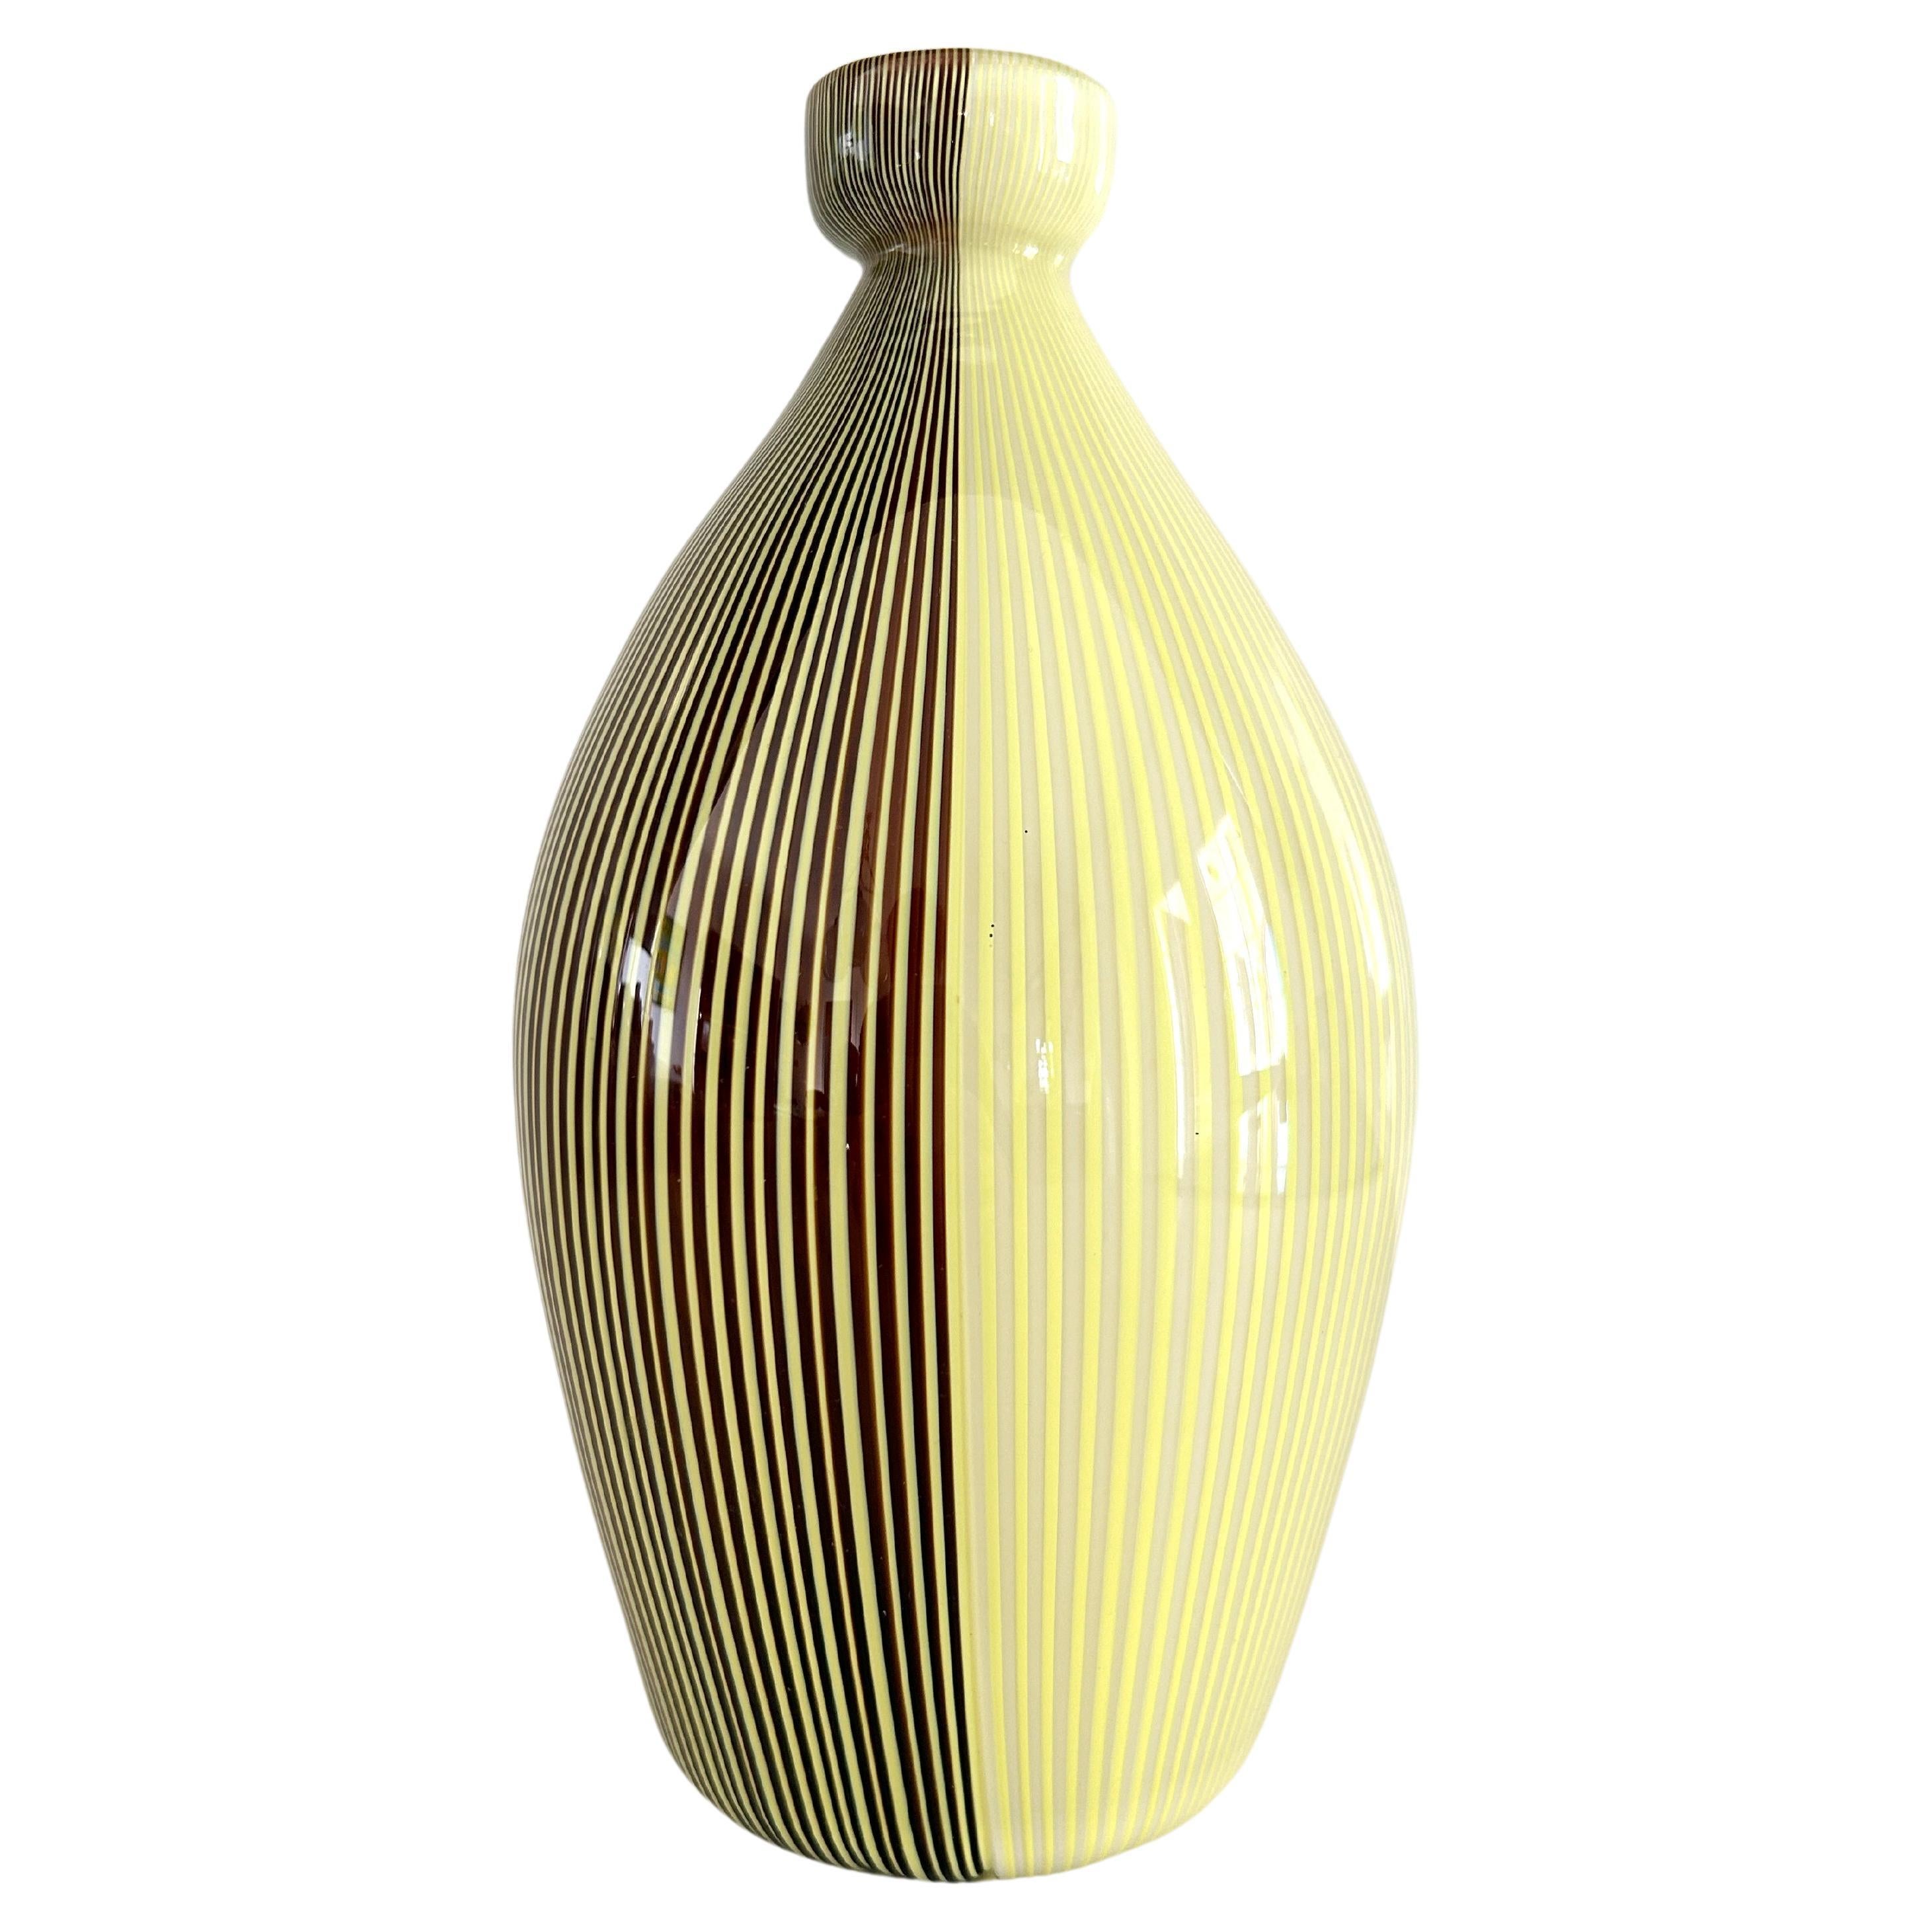 Venini "Shiny Fabric" Vase by Carlo Scarpa and Paolo Venini